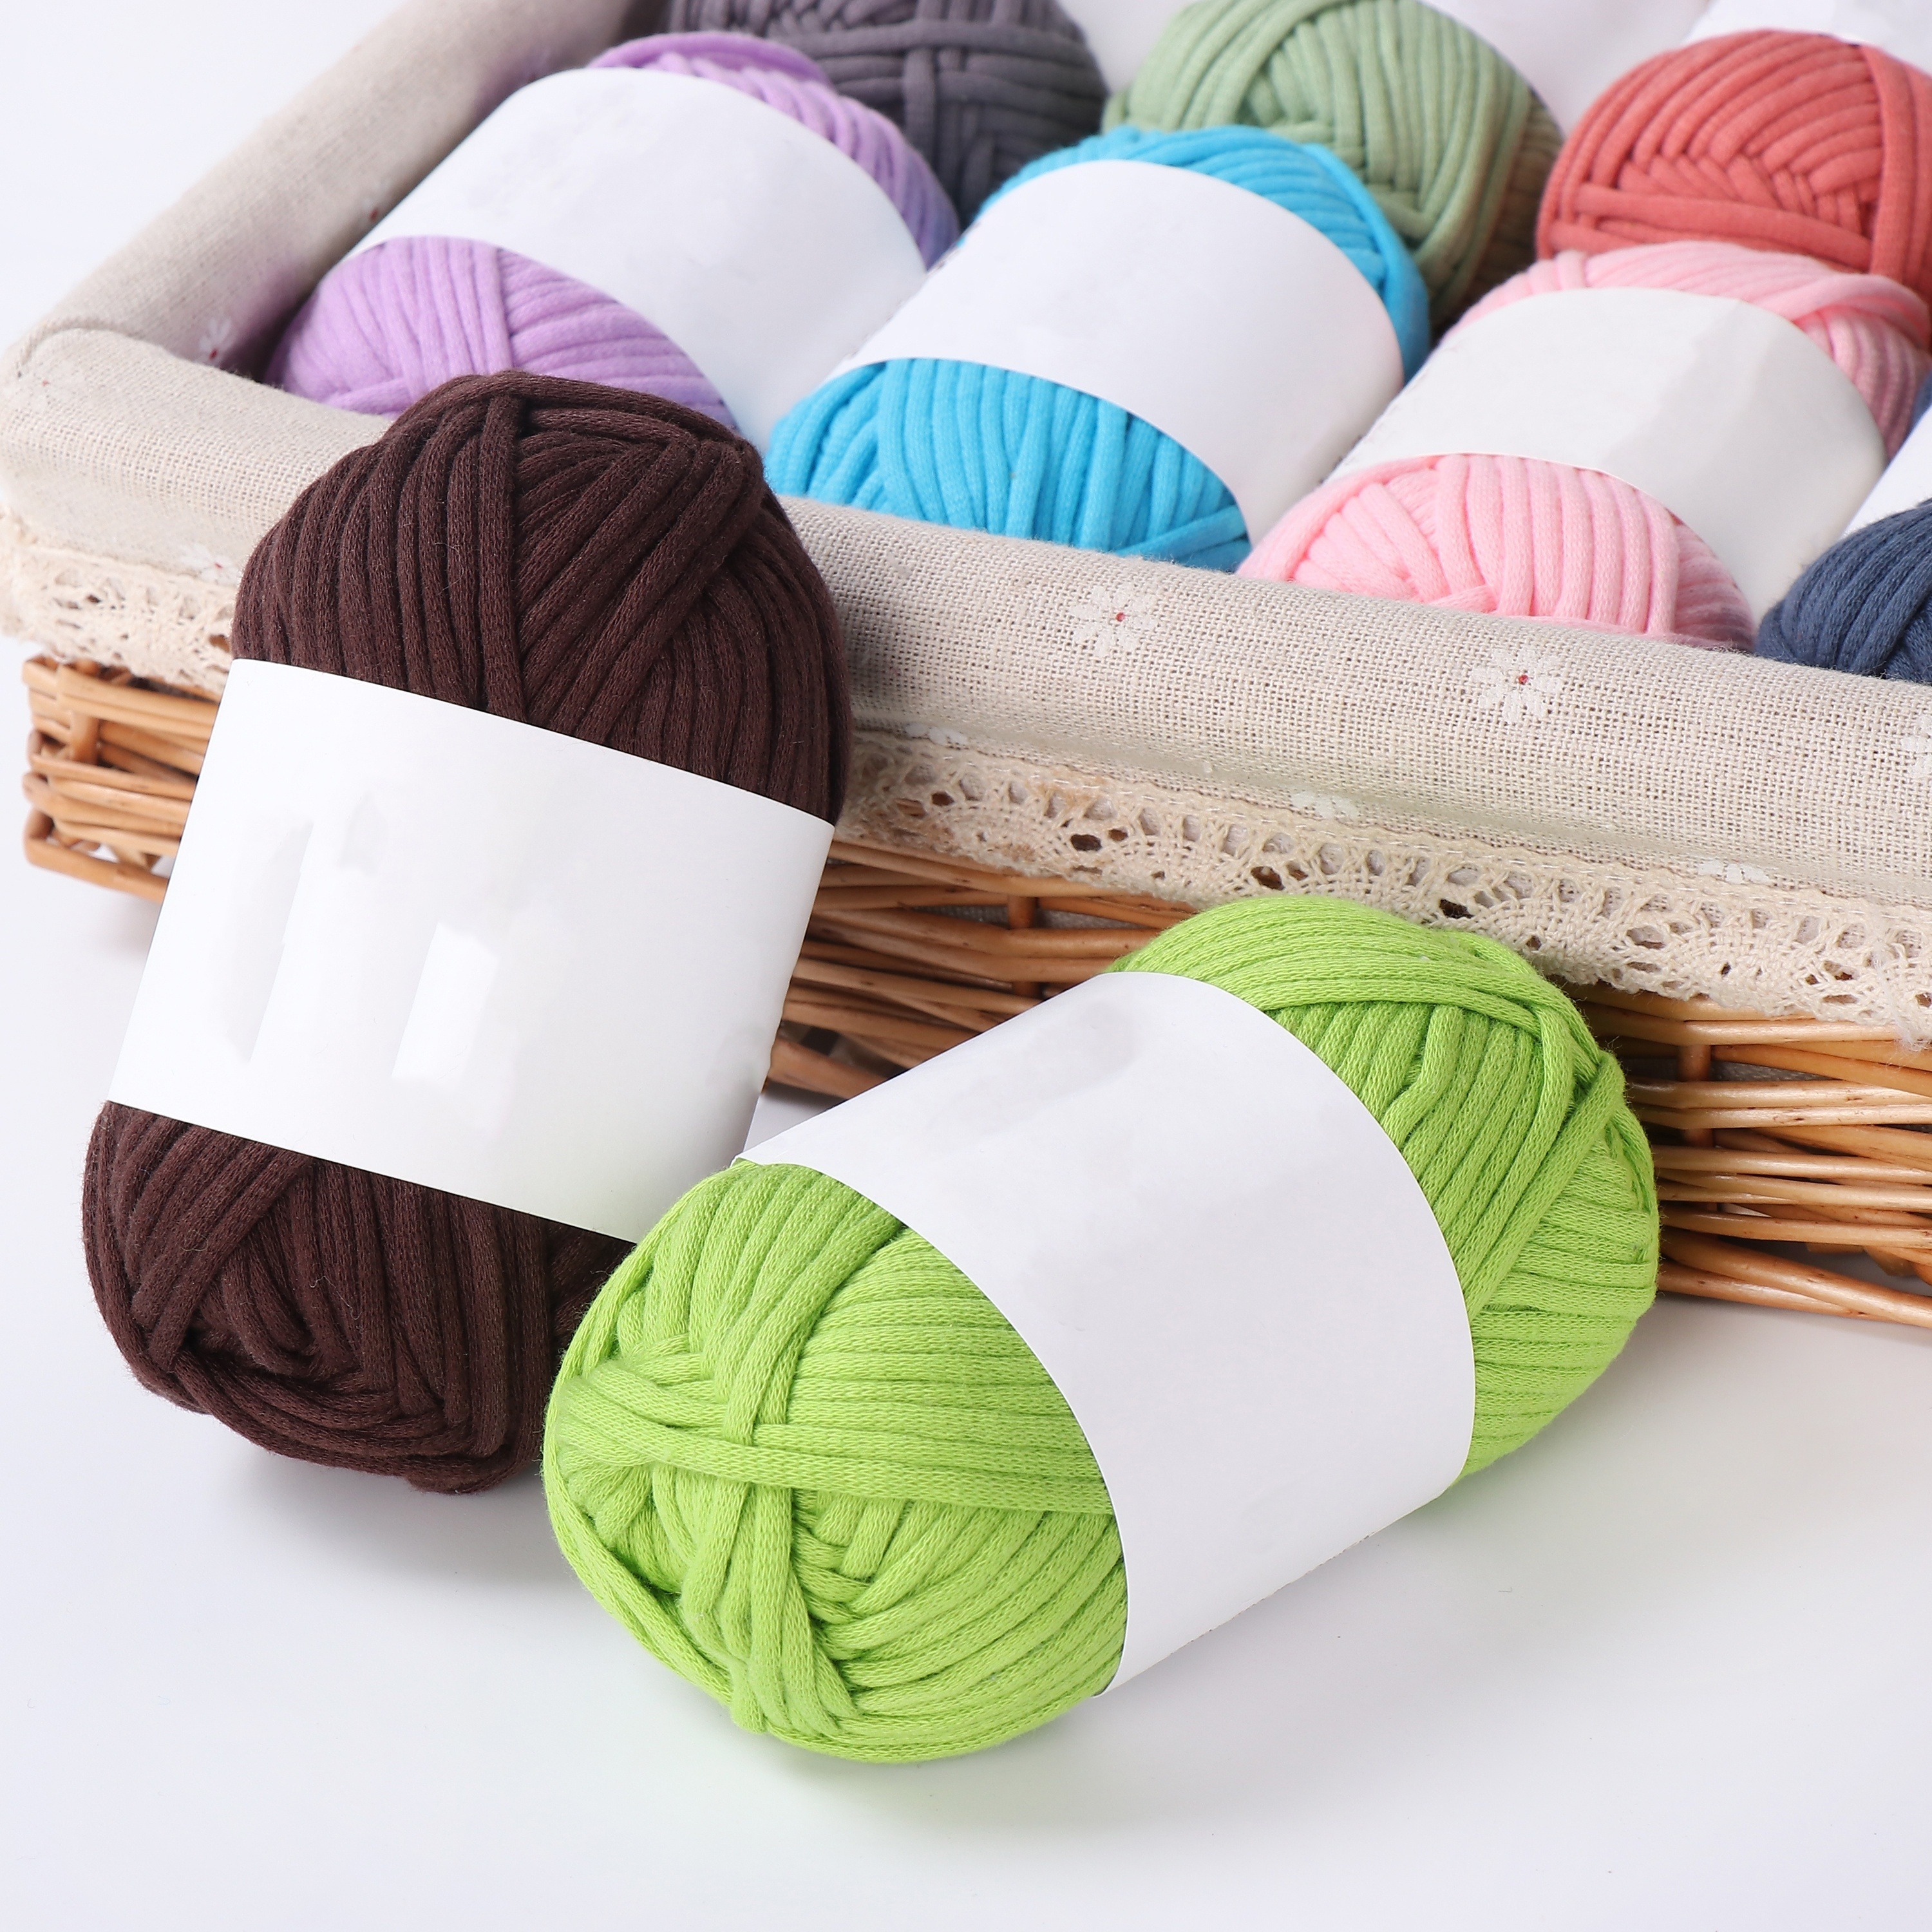  AOKID Wool Yarn for Crocheting and Knitting, Soft